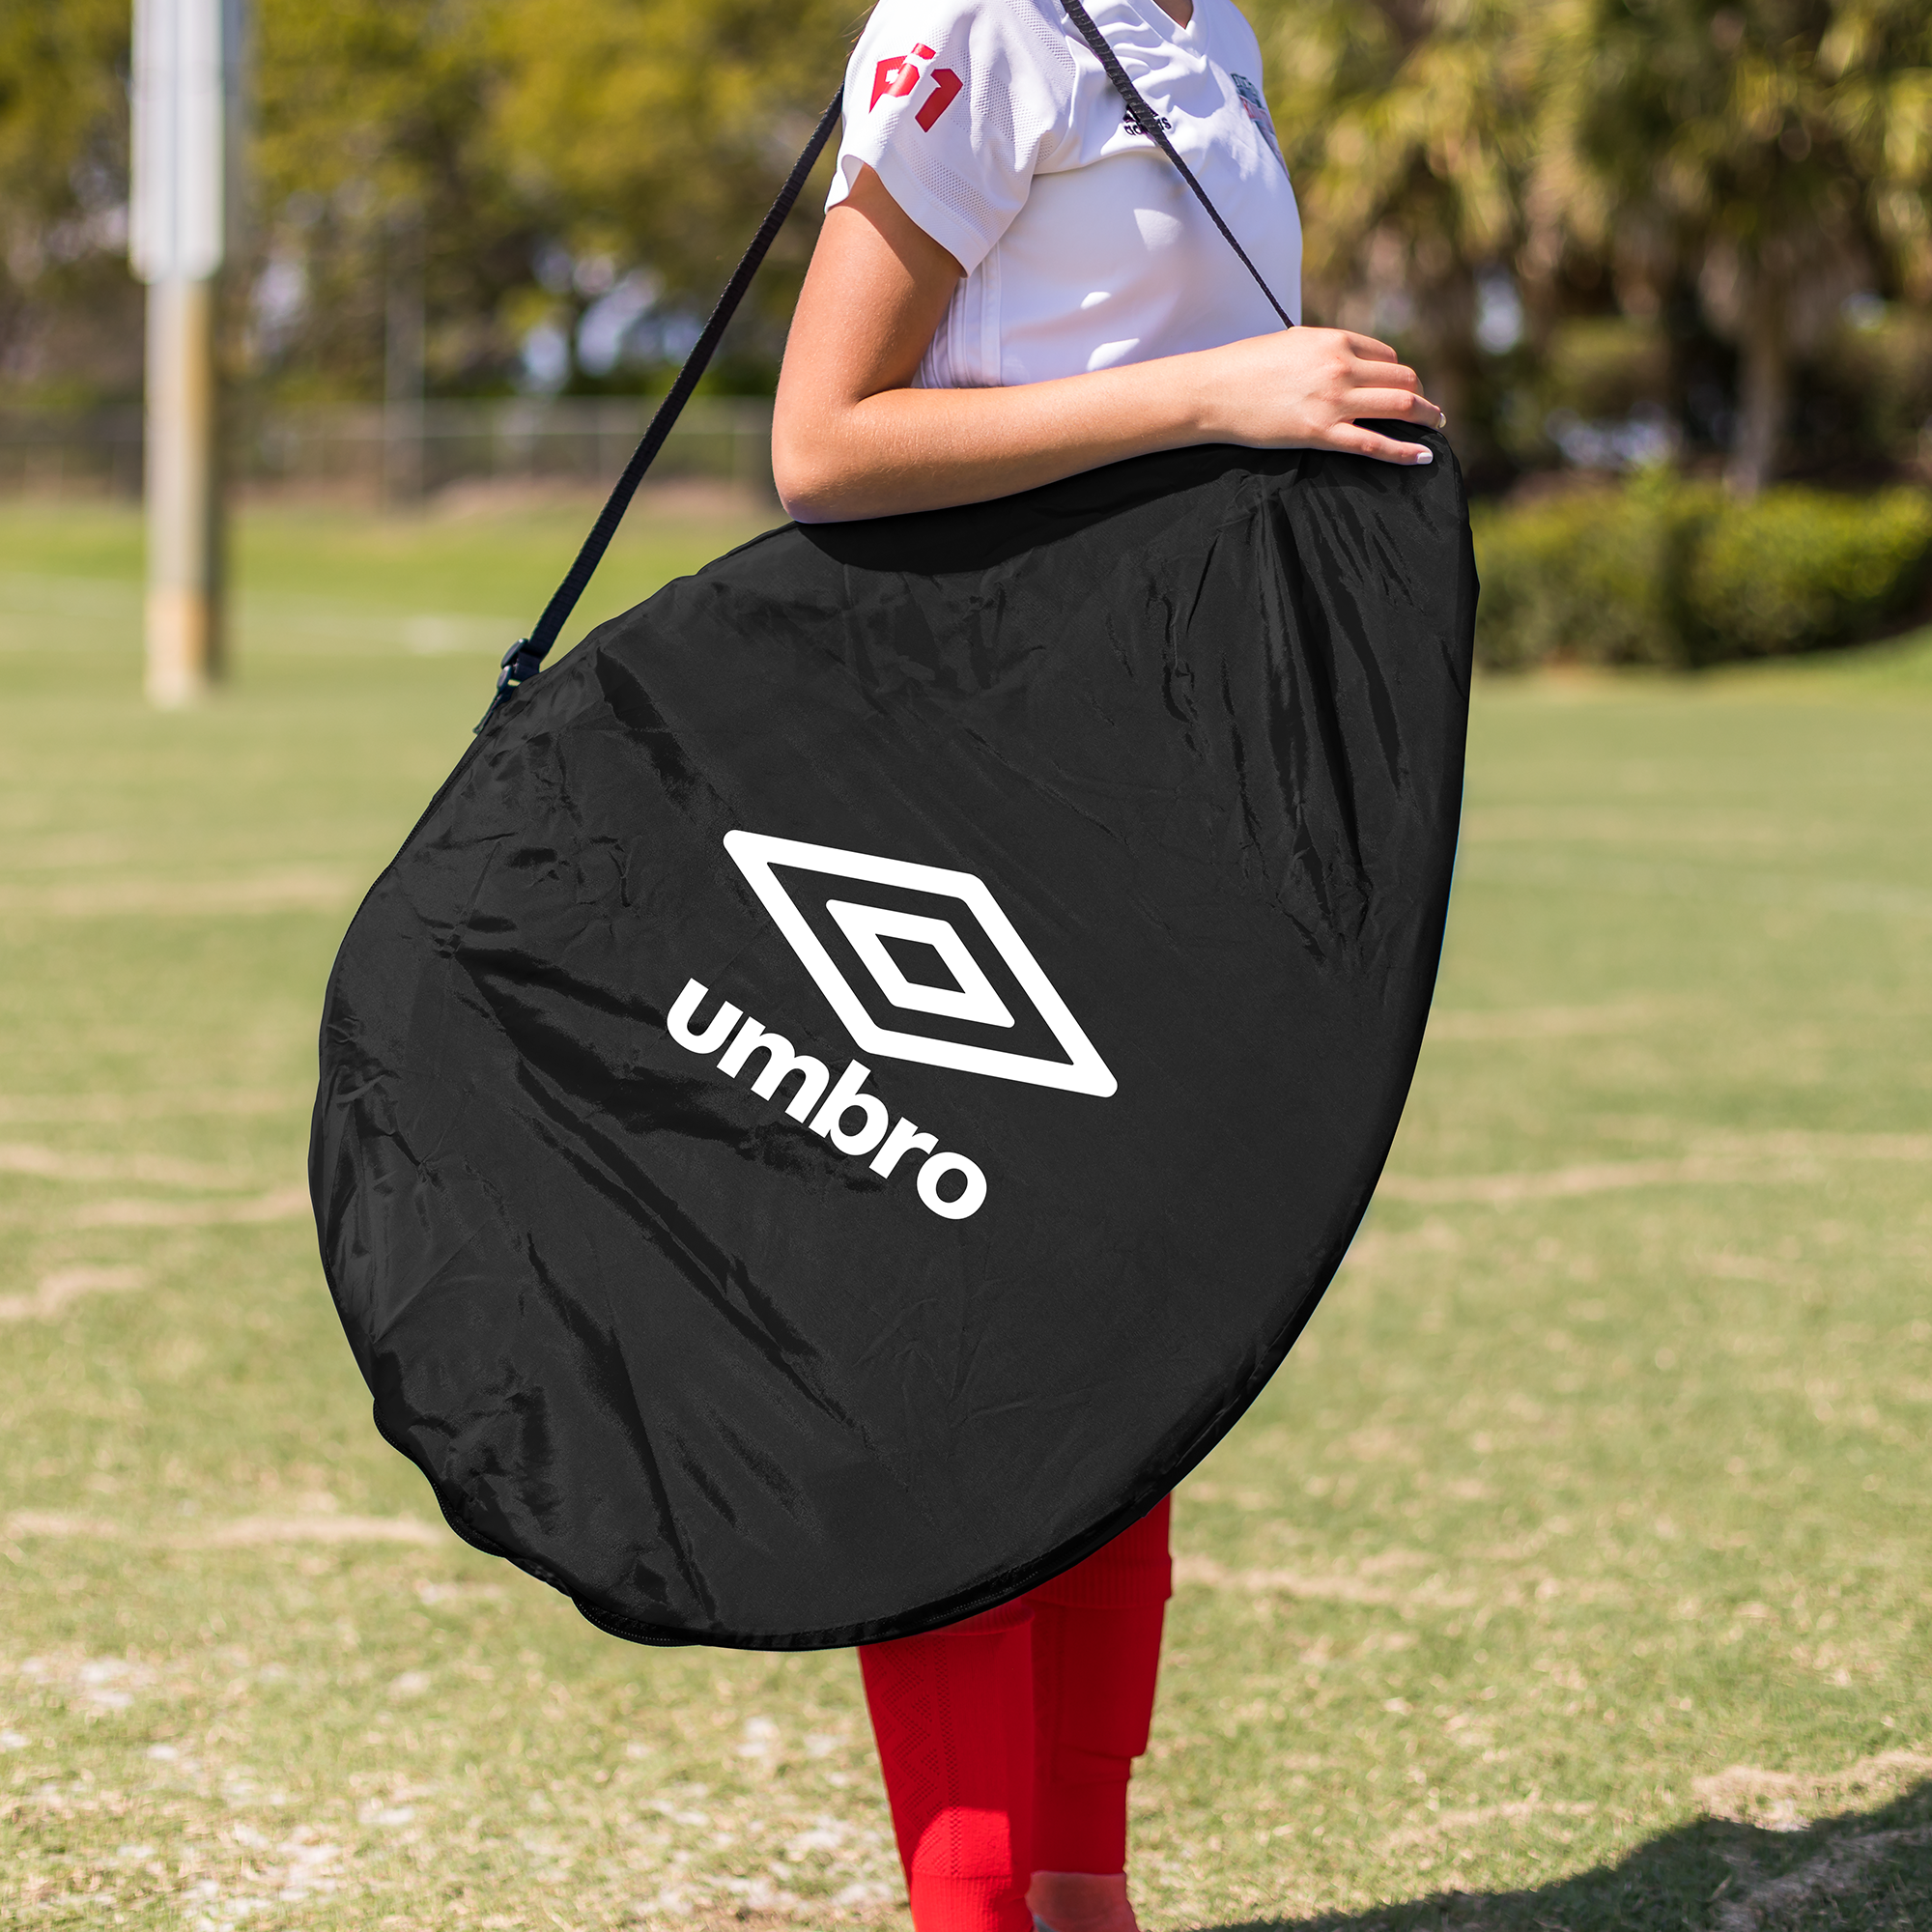 Umbro 3' x 2' Pop-up Soccer Goal Net Set - Portable 2 Goal Set with Carry Bag - image 5 of 5